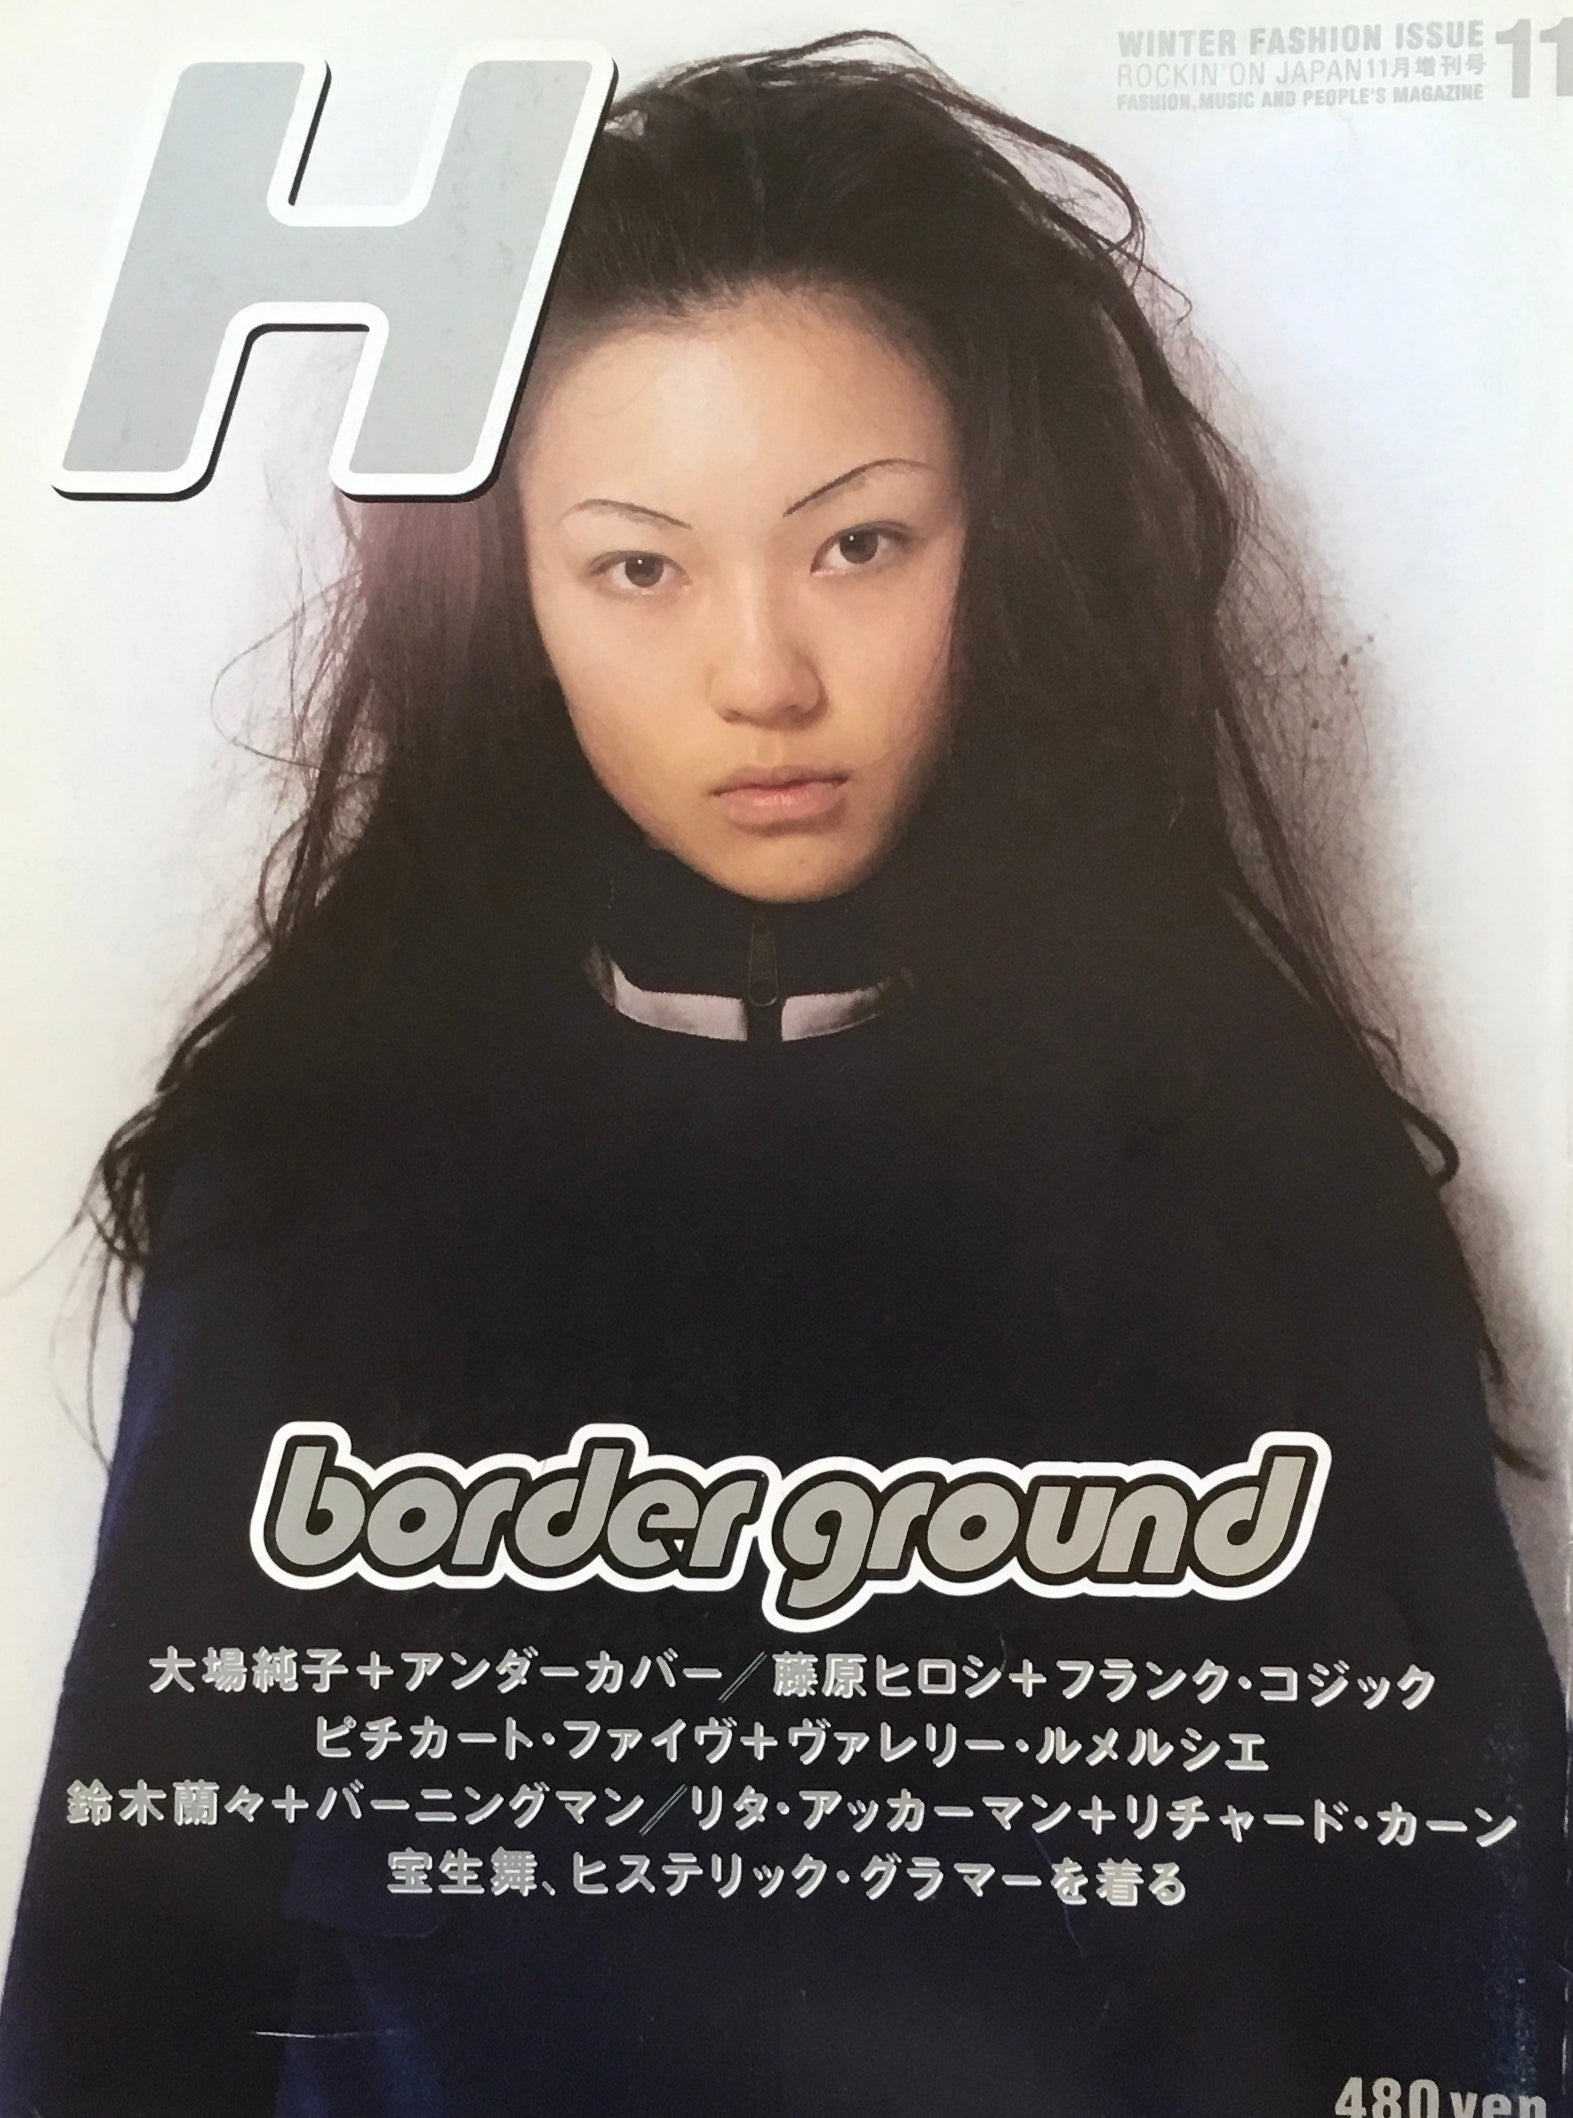 H　VOL.13　ROCKIN'ON JAPAN　1996年11月増刊号　border ground